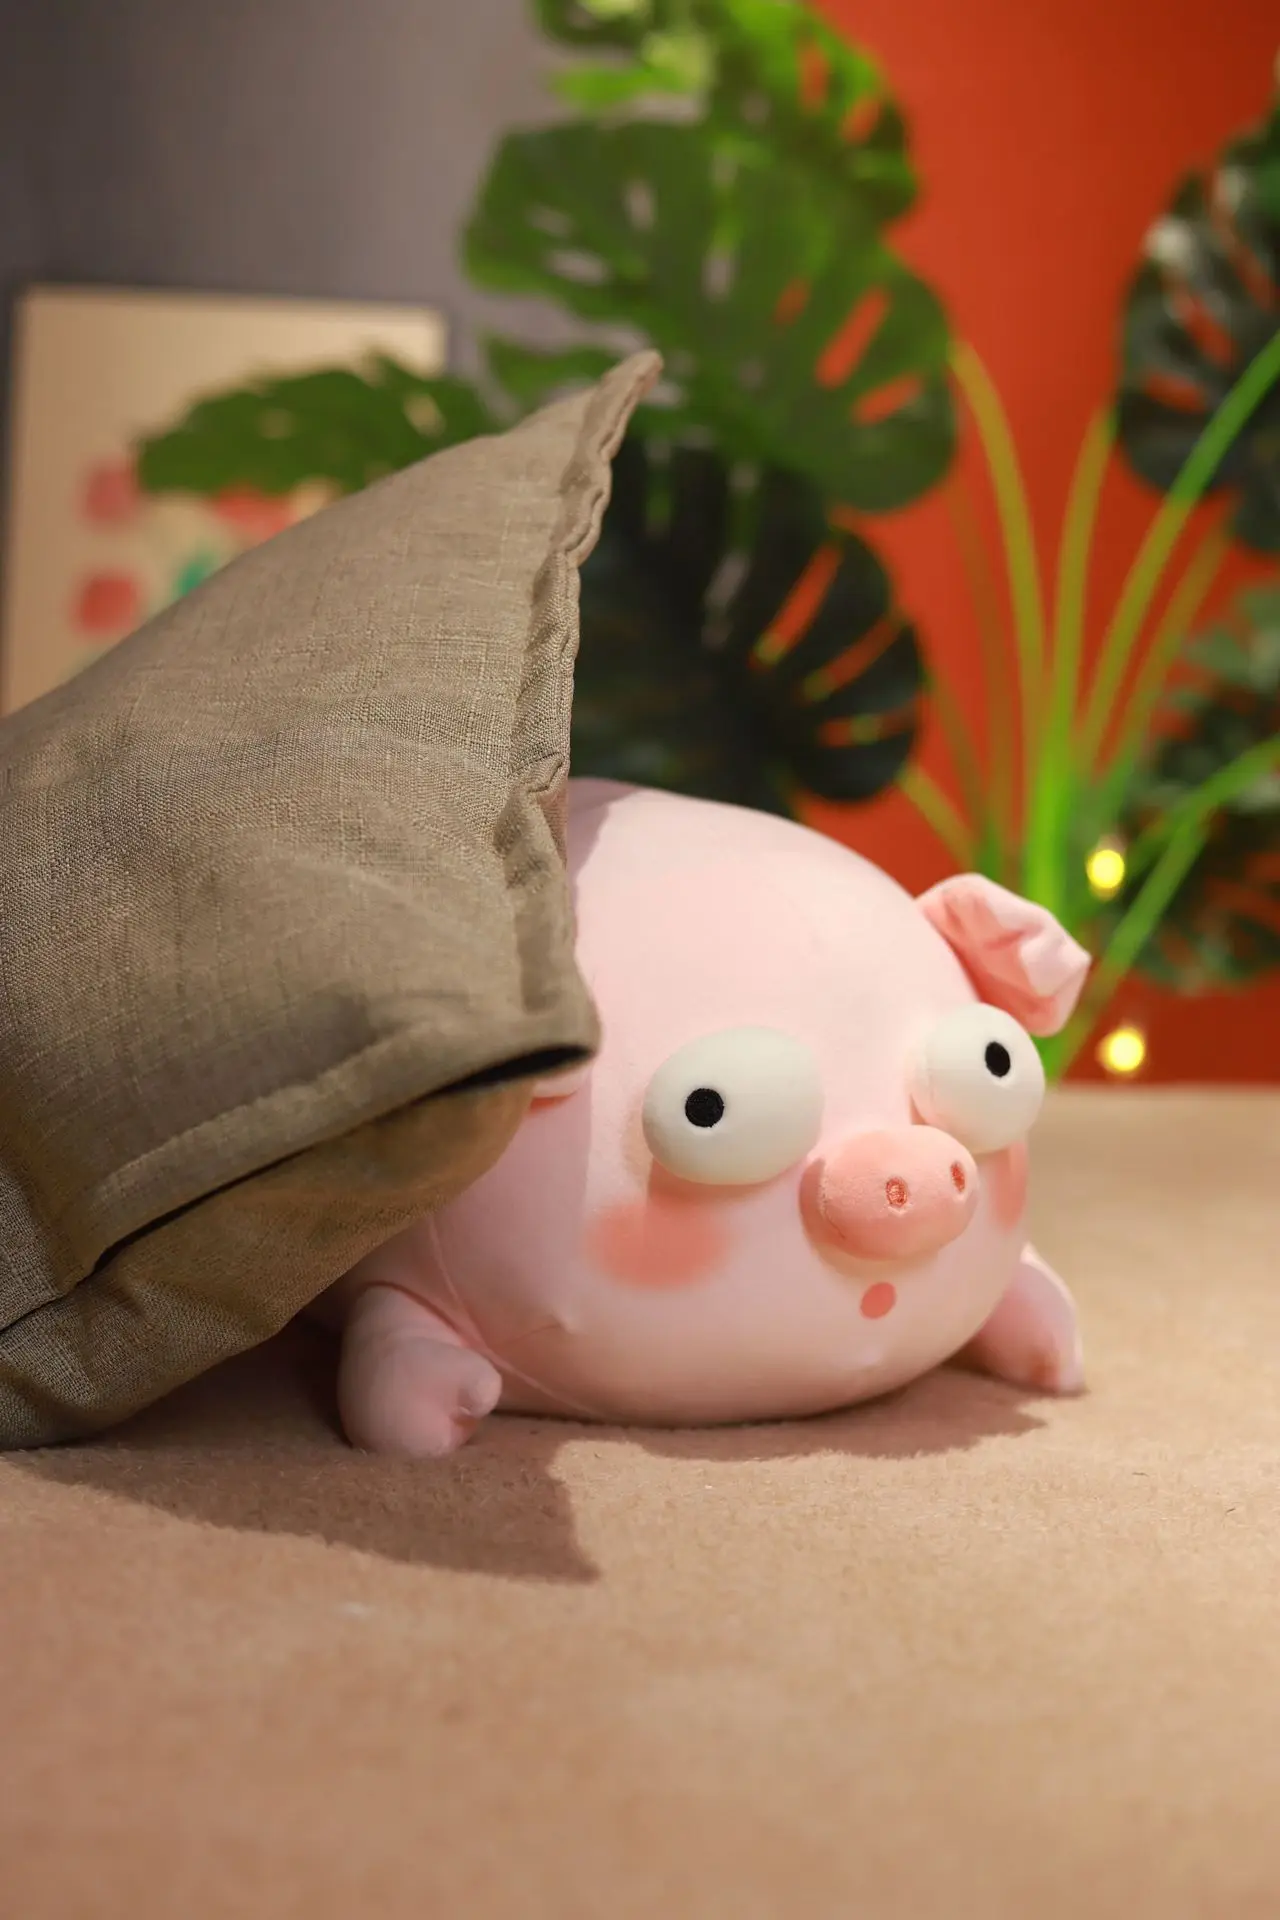 Sea Pig Plush | Big Eyes Ugly Sleeping Pig Plush Toy -5